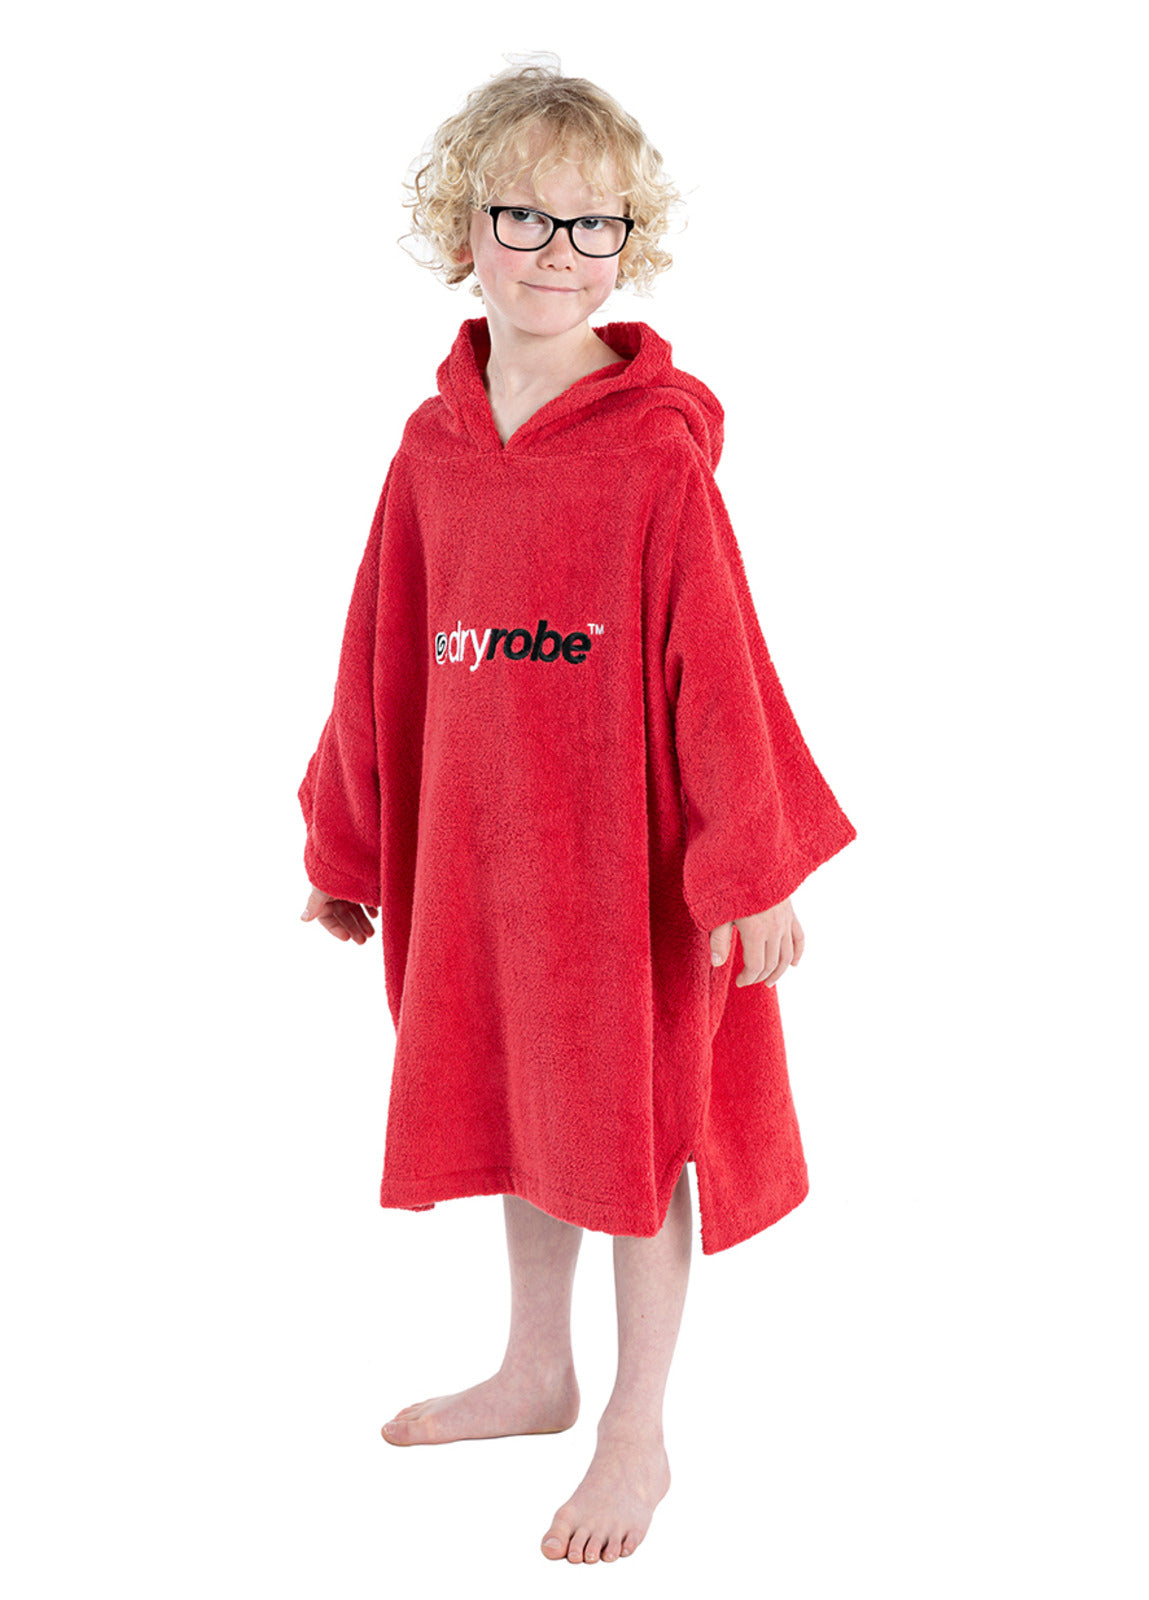 Dryrobe Kids Organic Towel dryrobe - Red